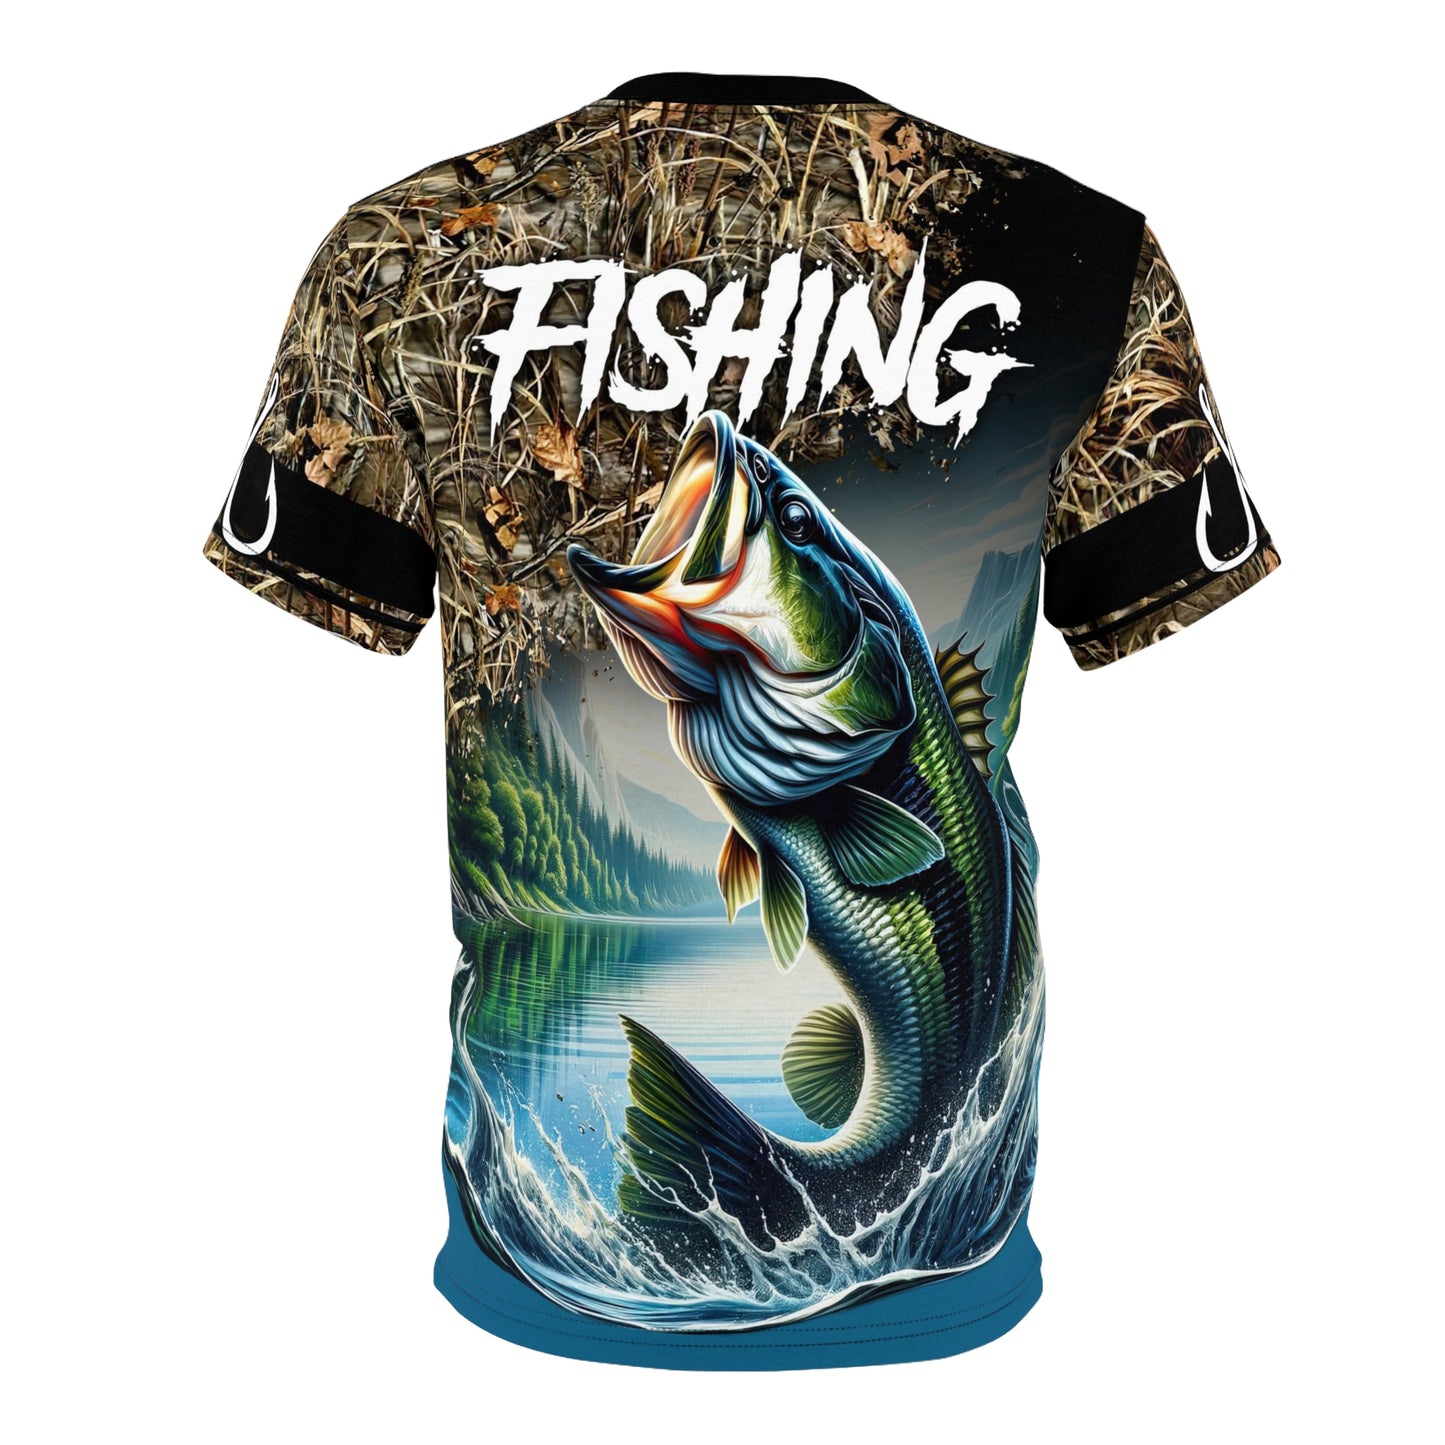 Fishing Gives Me Joy T-Shirt